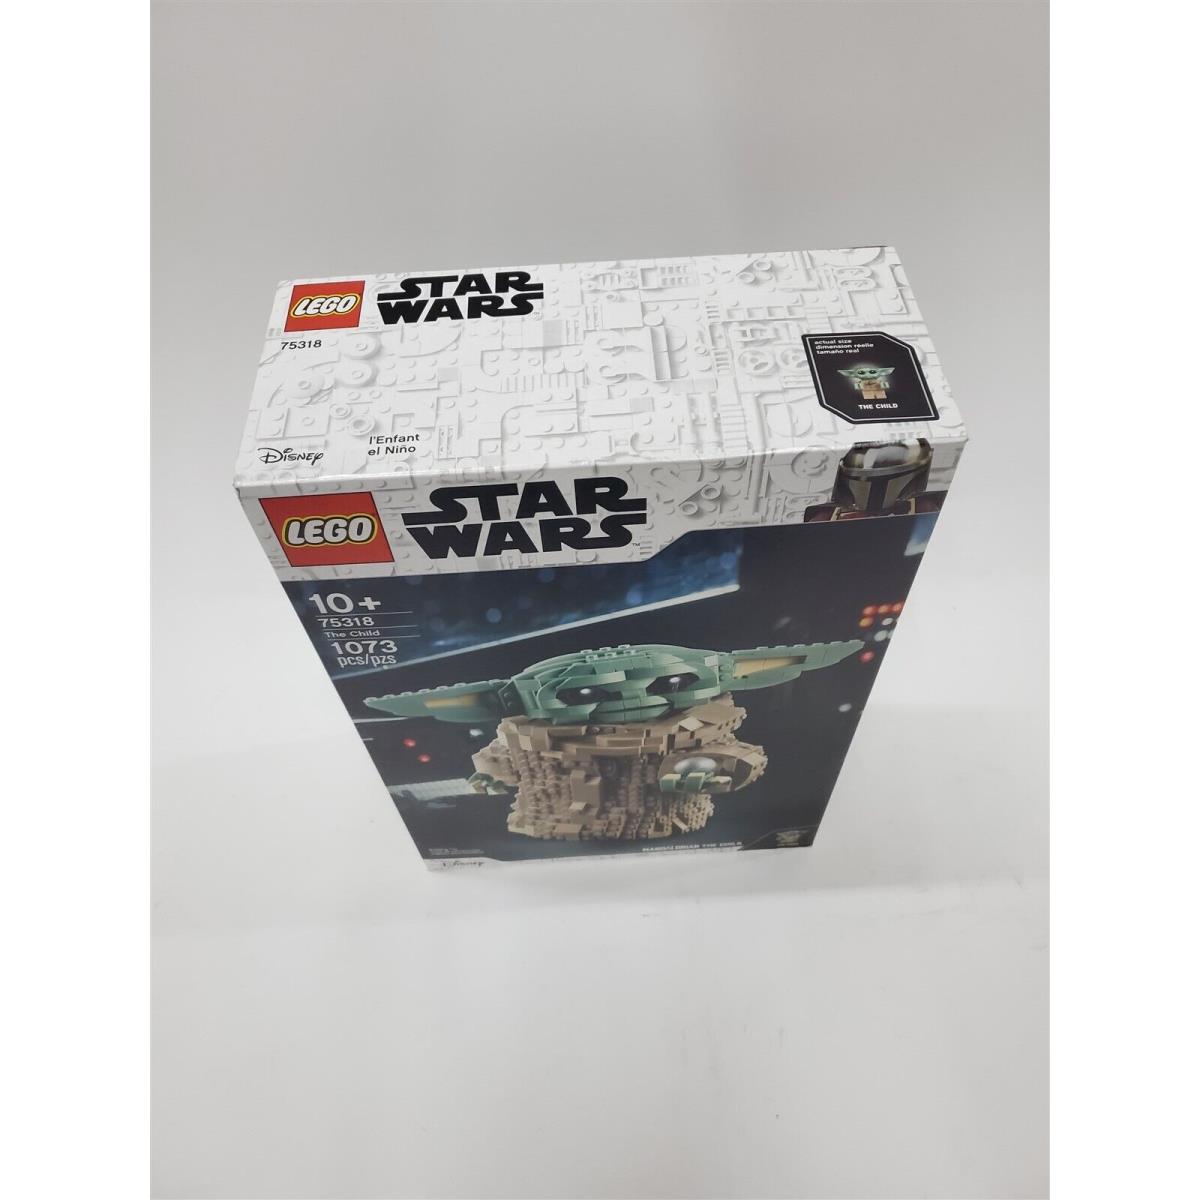 Lego Star Wars: The Mandalorian Series The Child 75318 Baby Yoda Grogu Figure